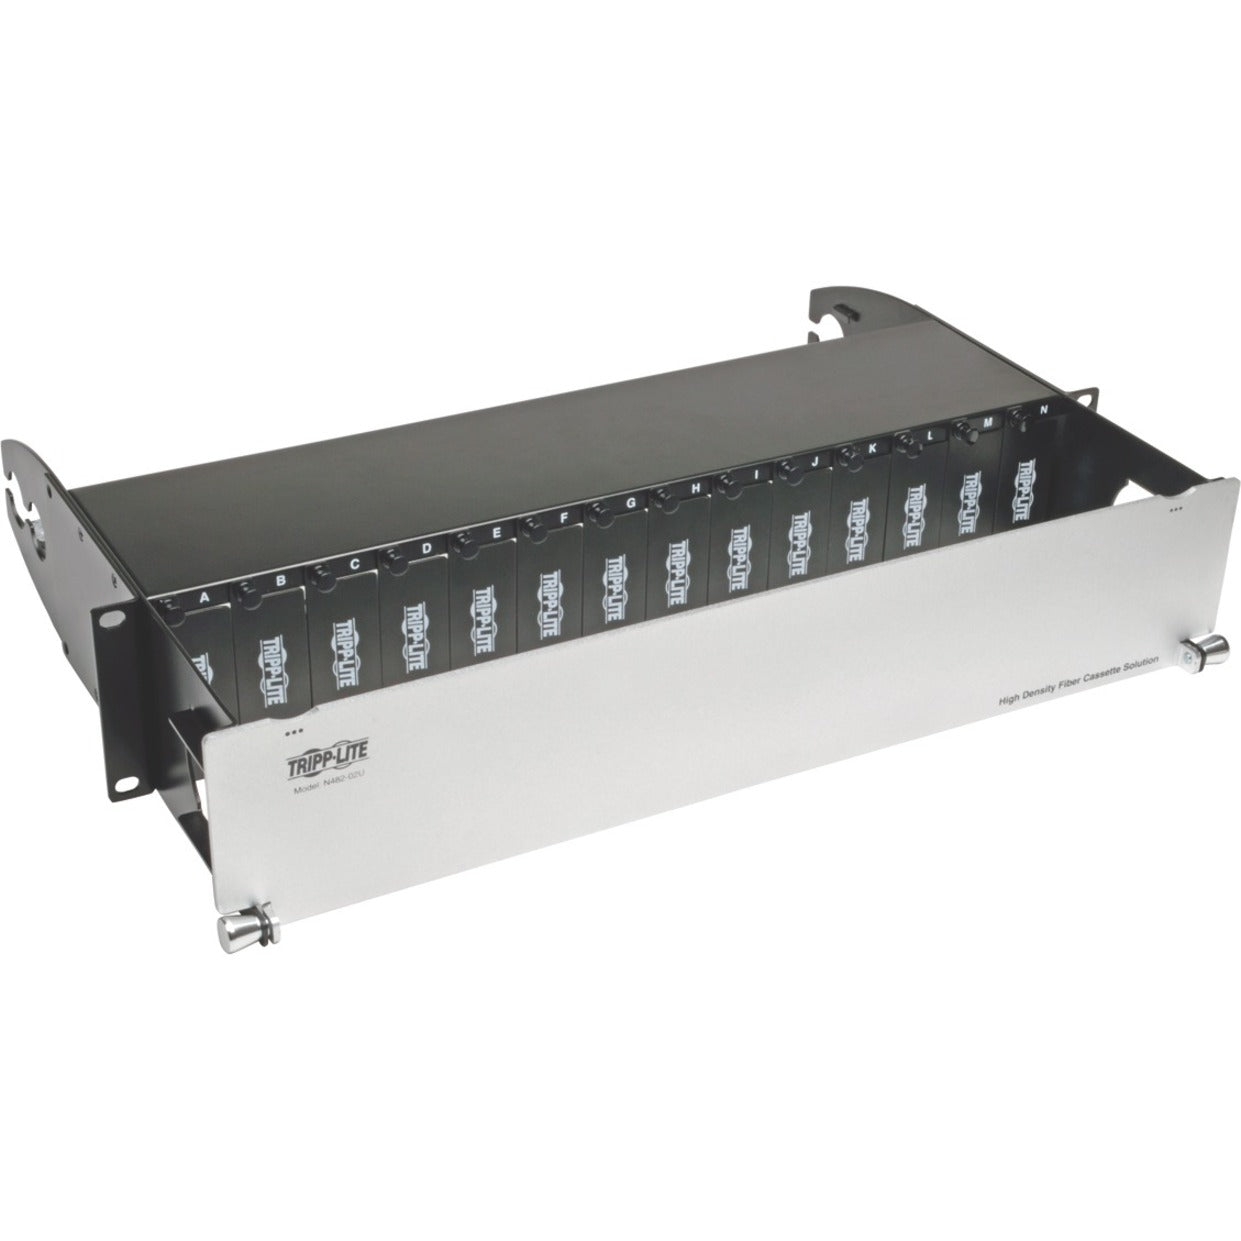 Tripp Lite N482-02U High Density Fiber Enclosure Panel, 2U, 14-Cassette Capacity, Lifetime Warranty